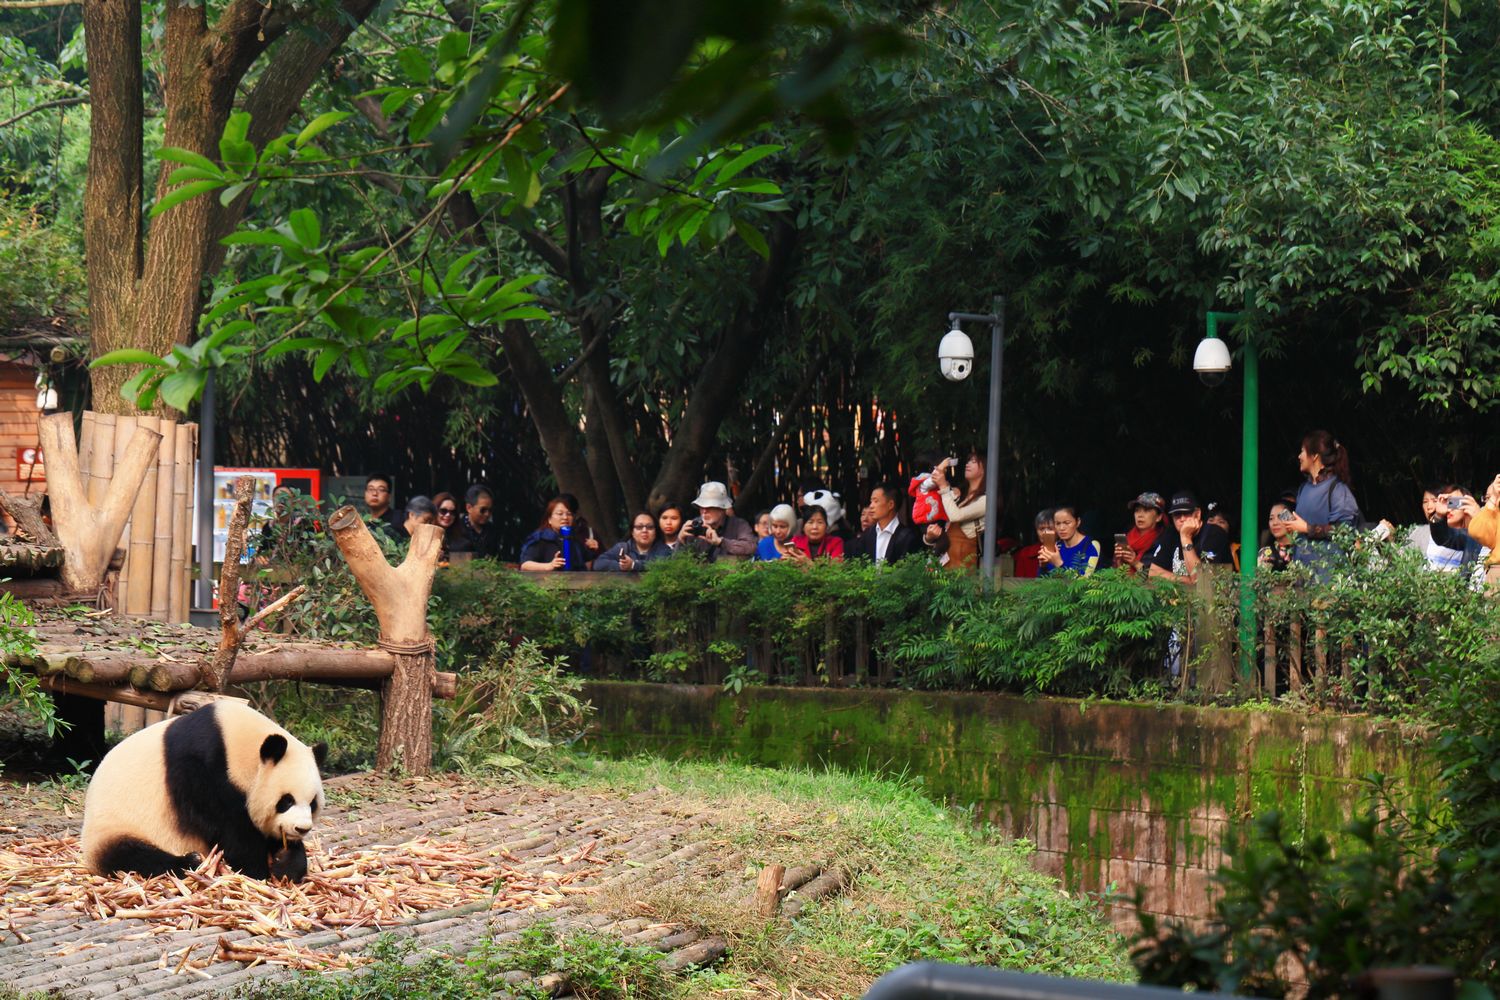 Panda Gigante - Centro di Ricerca Chengdu